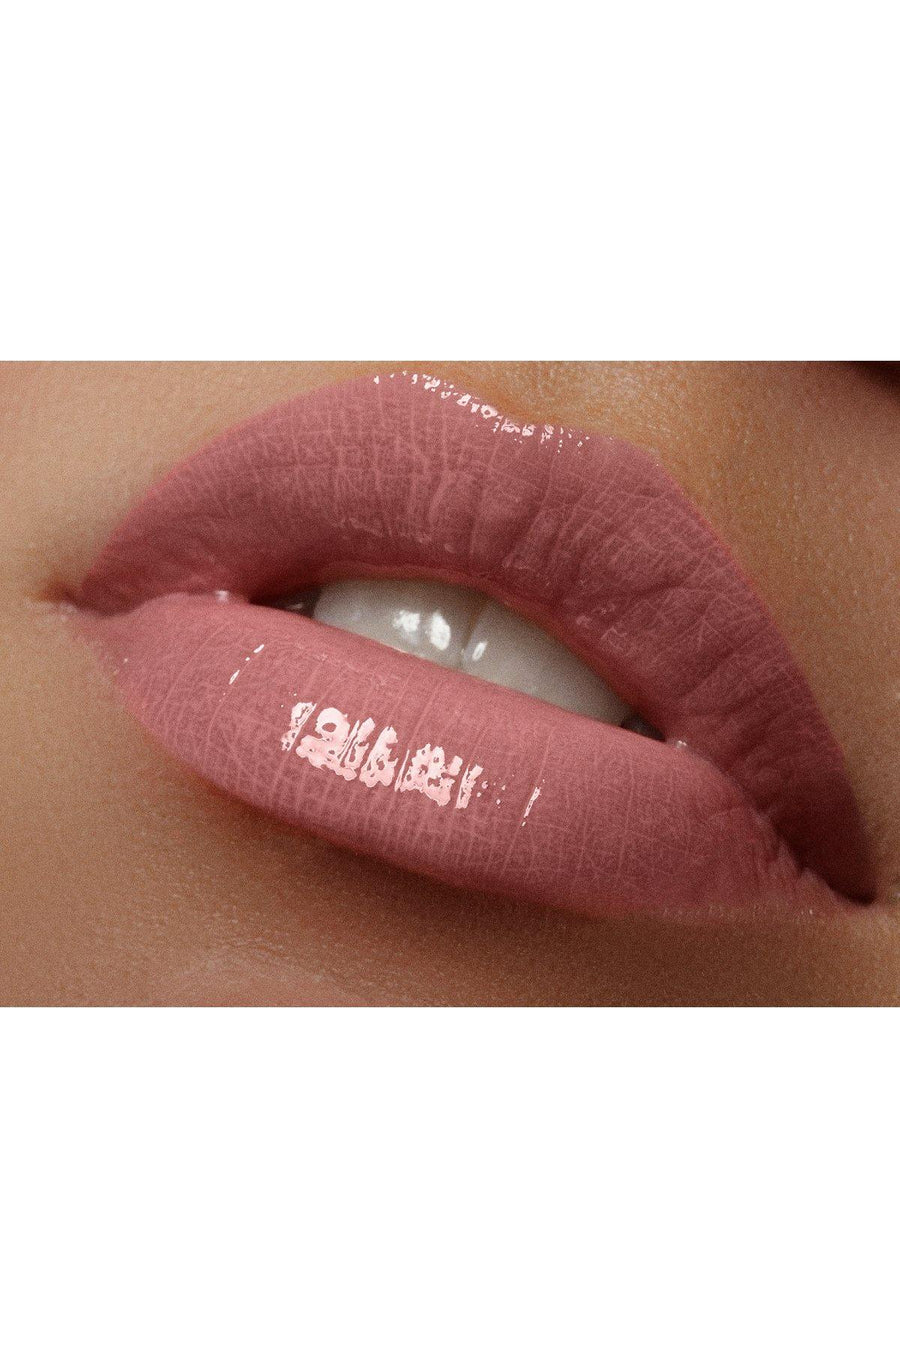 Lip Gloss #5 - Pink Snow - Blend Mineral Cosmetics